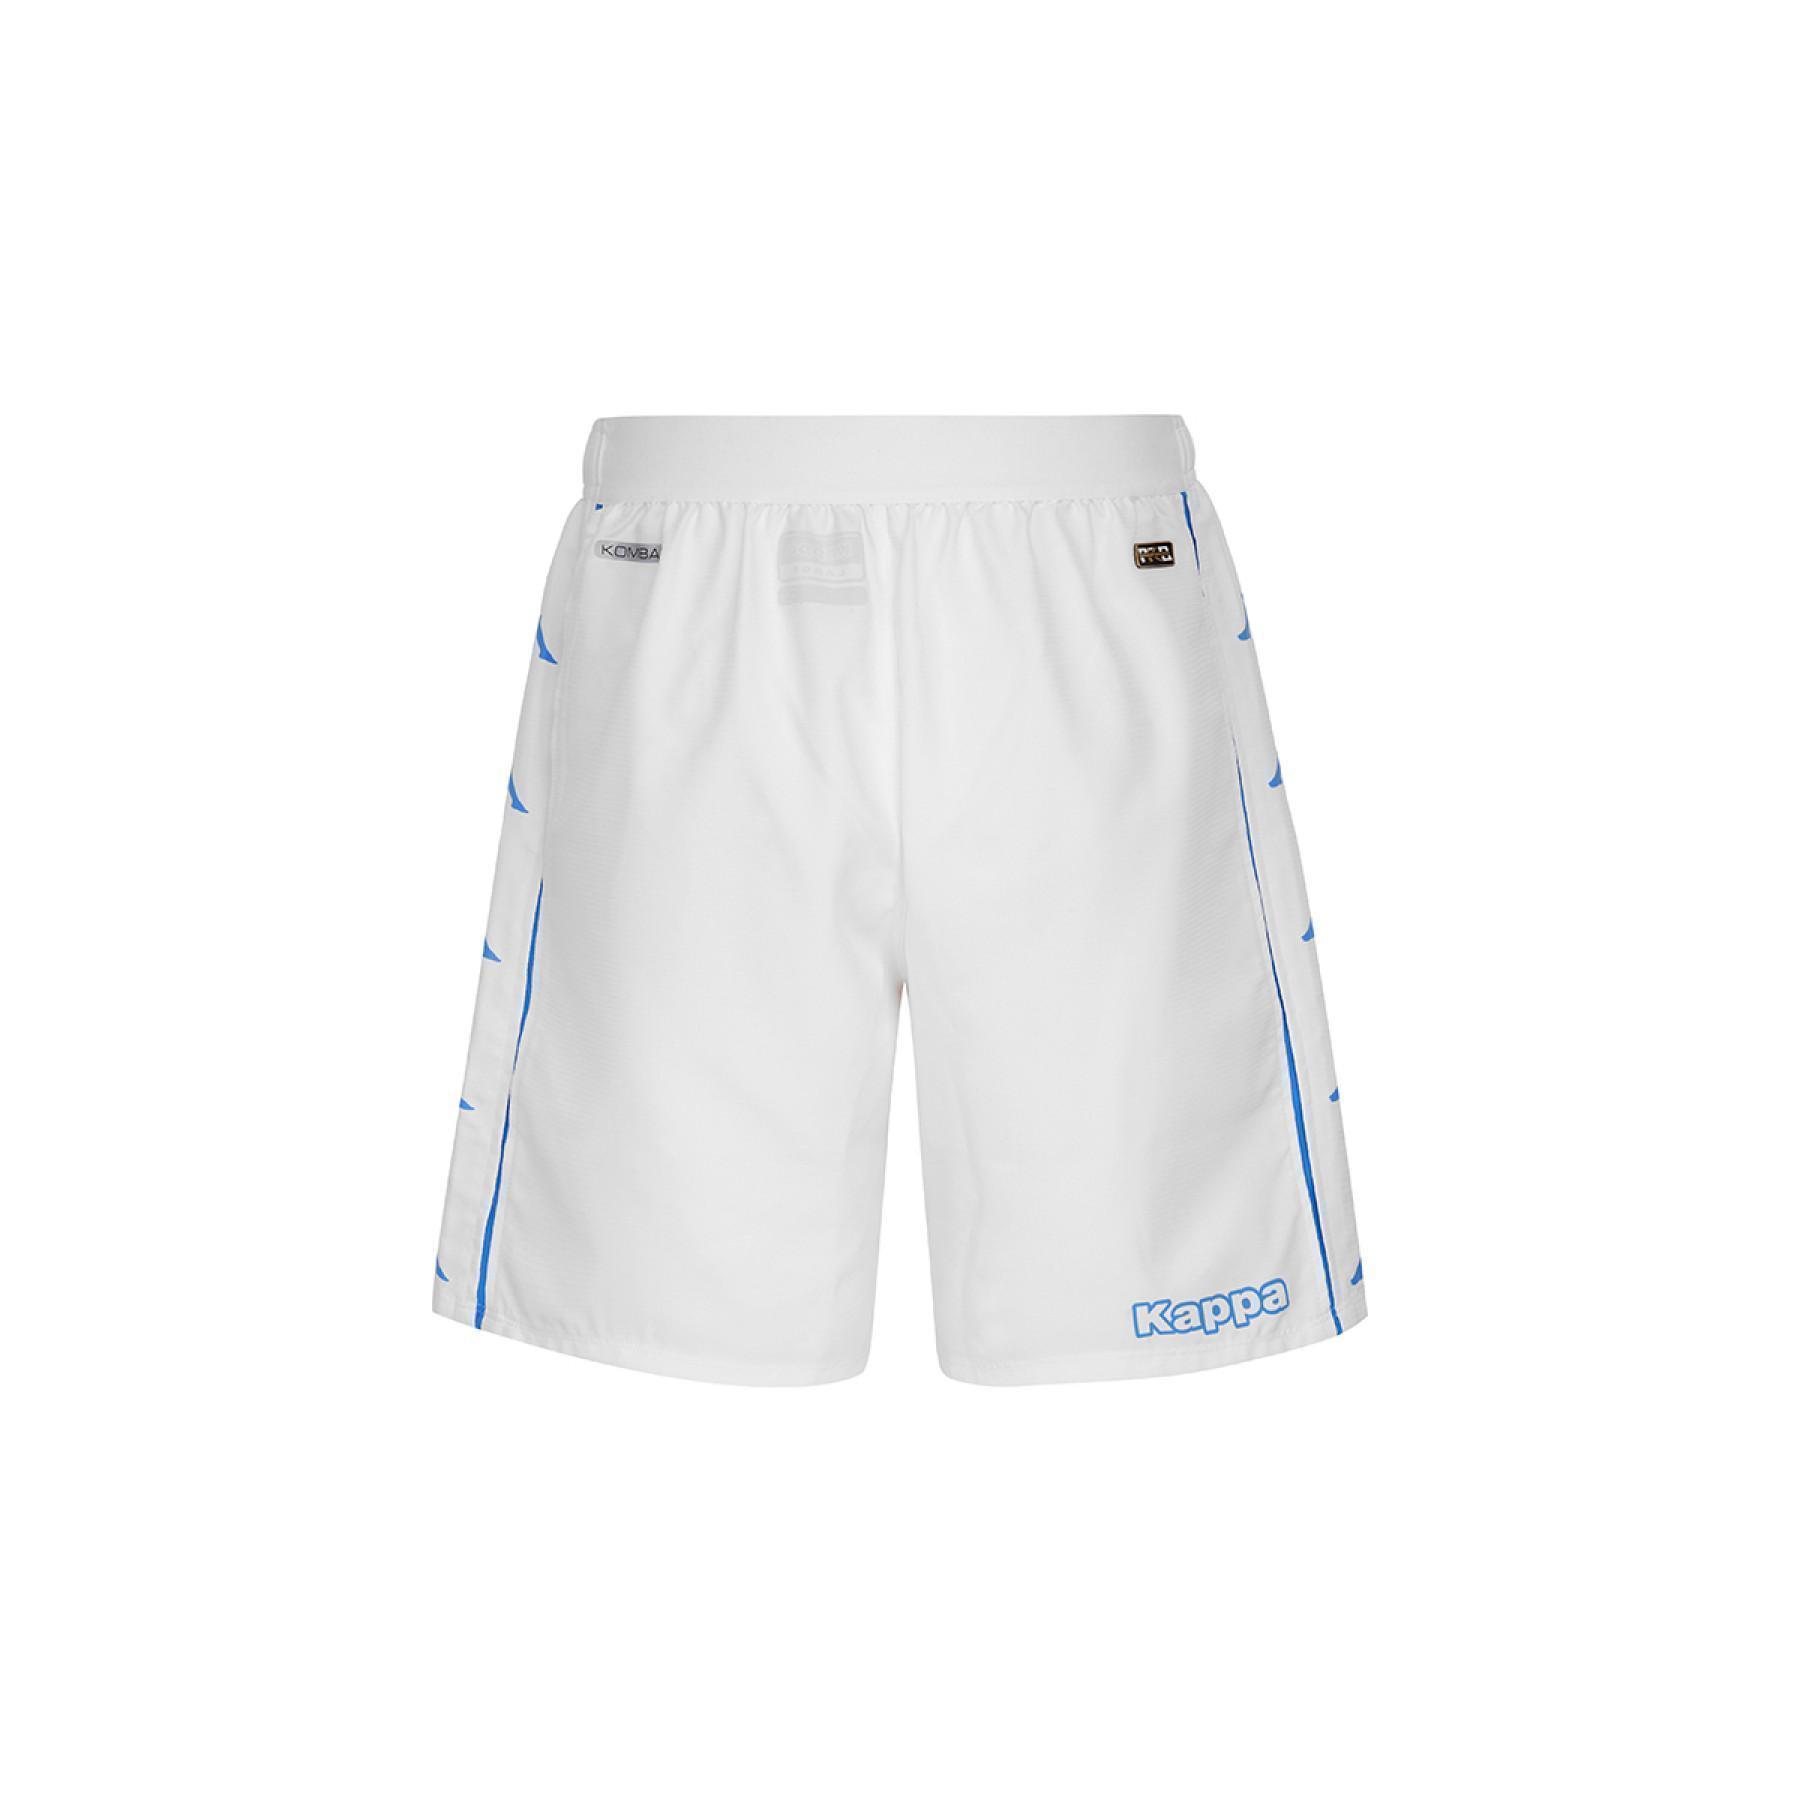 Pantalones cortos para el hogar SSC Napoli 2020/21